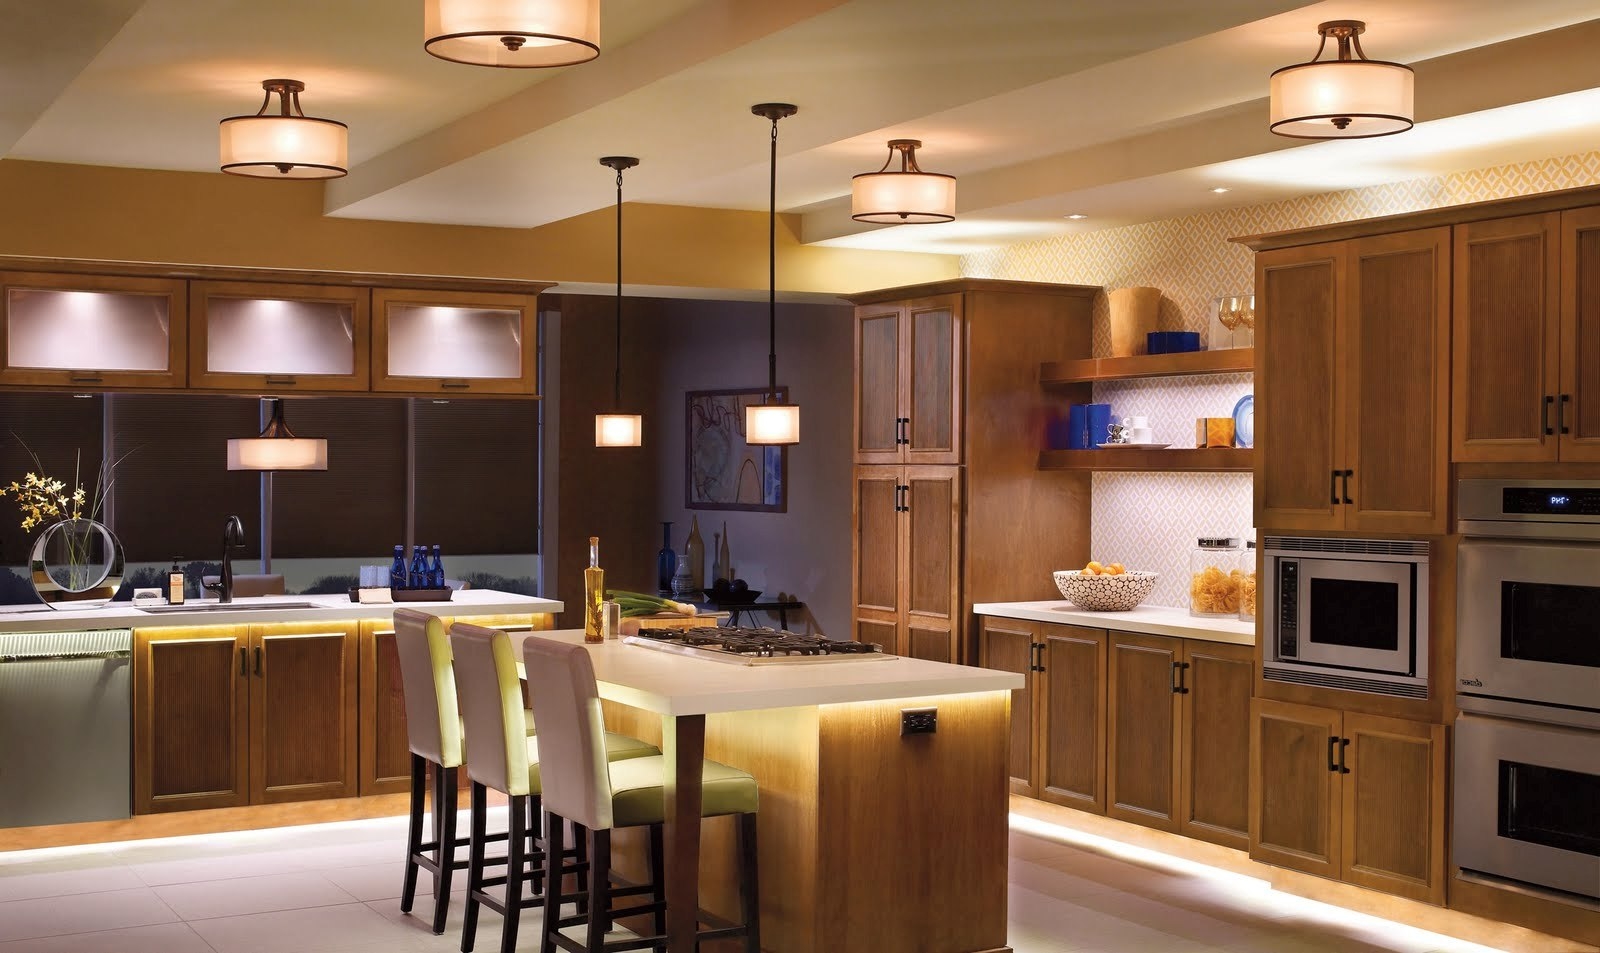 Lighting Ideas For Kitchen Ceilingskitchen ceiling light fixtures design gyleshomes